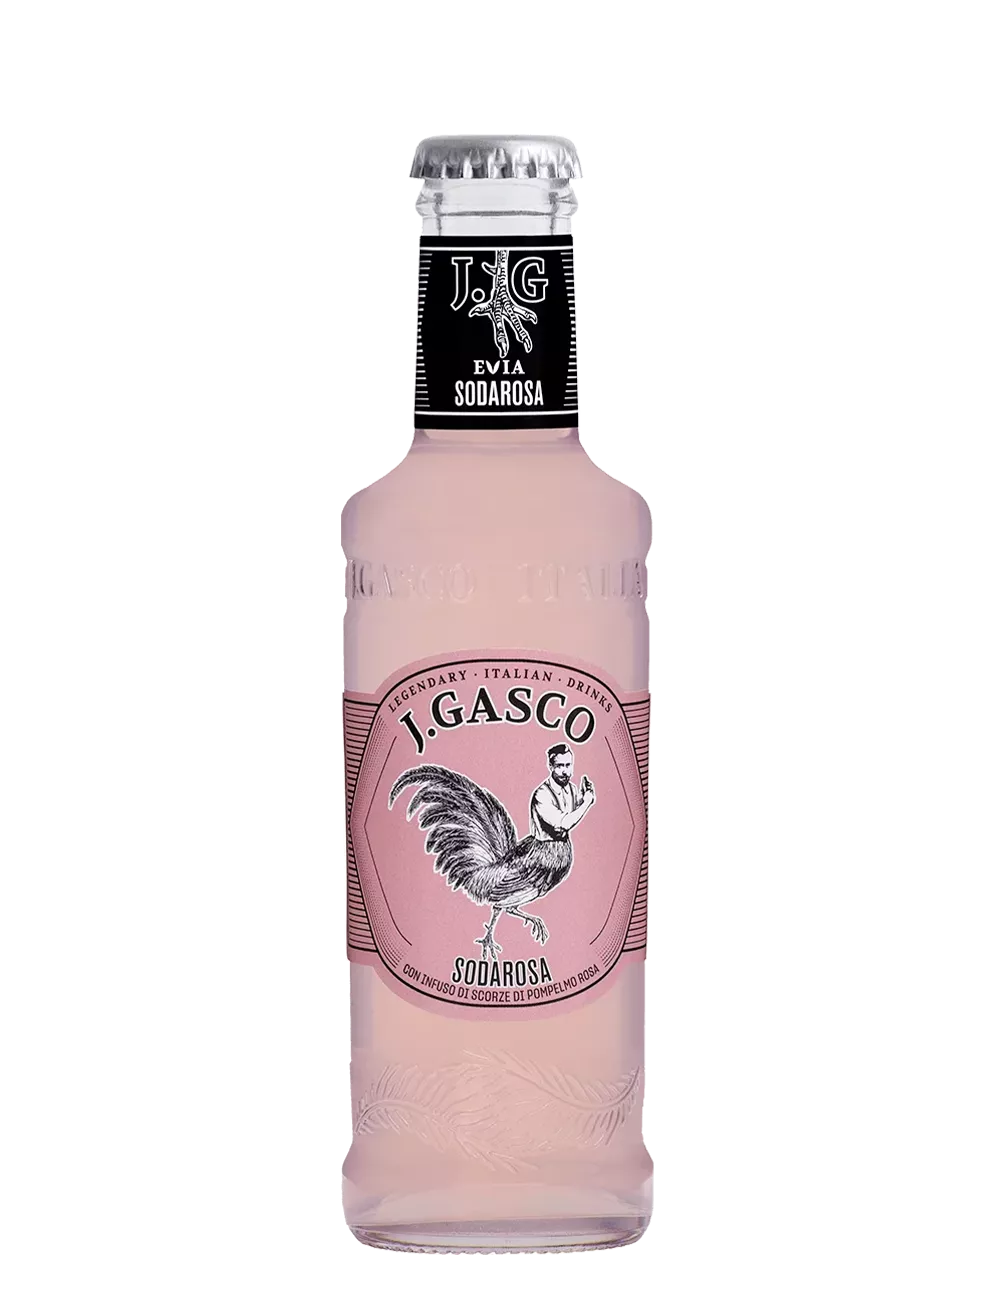 J.Gasco - Sodarossa - Soft drink